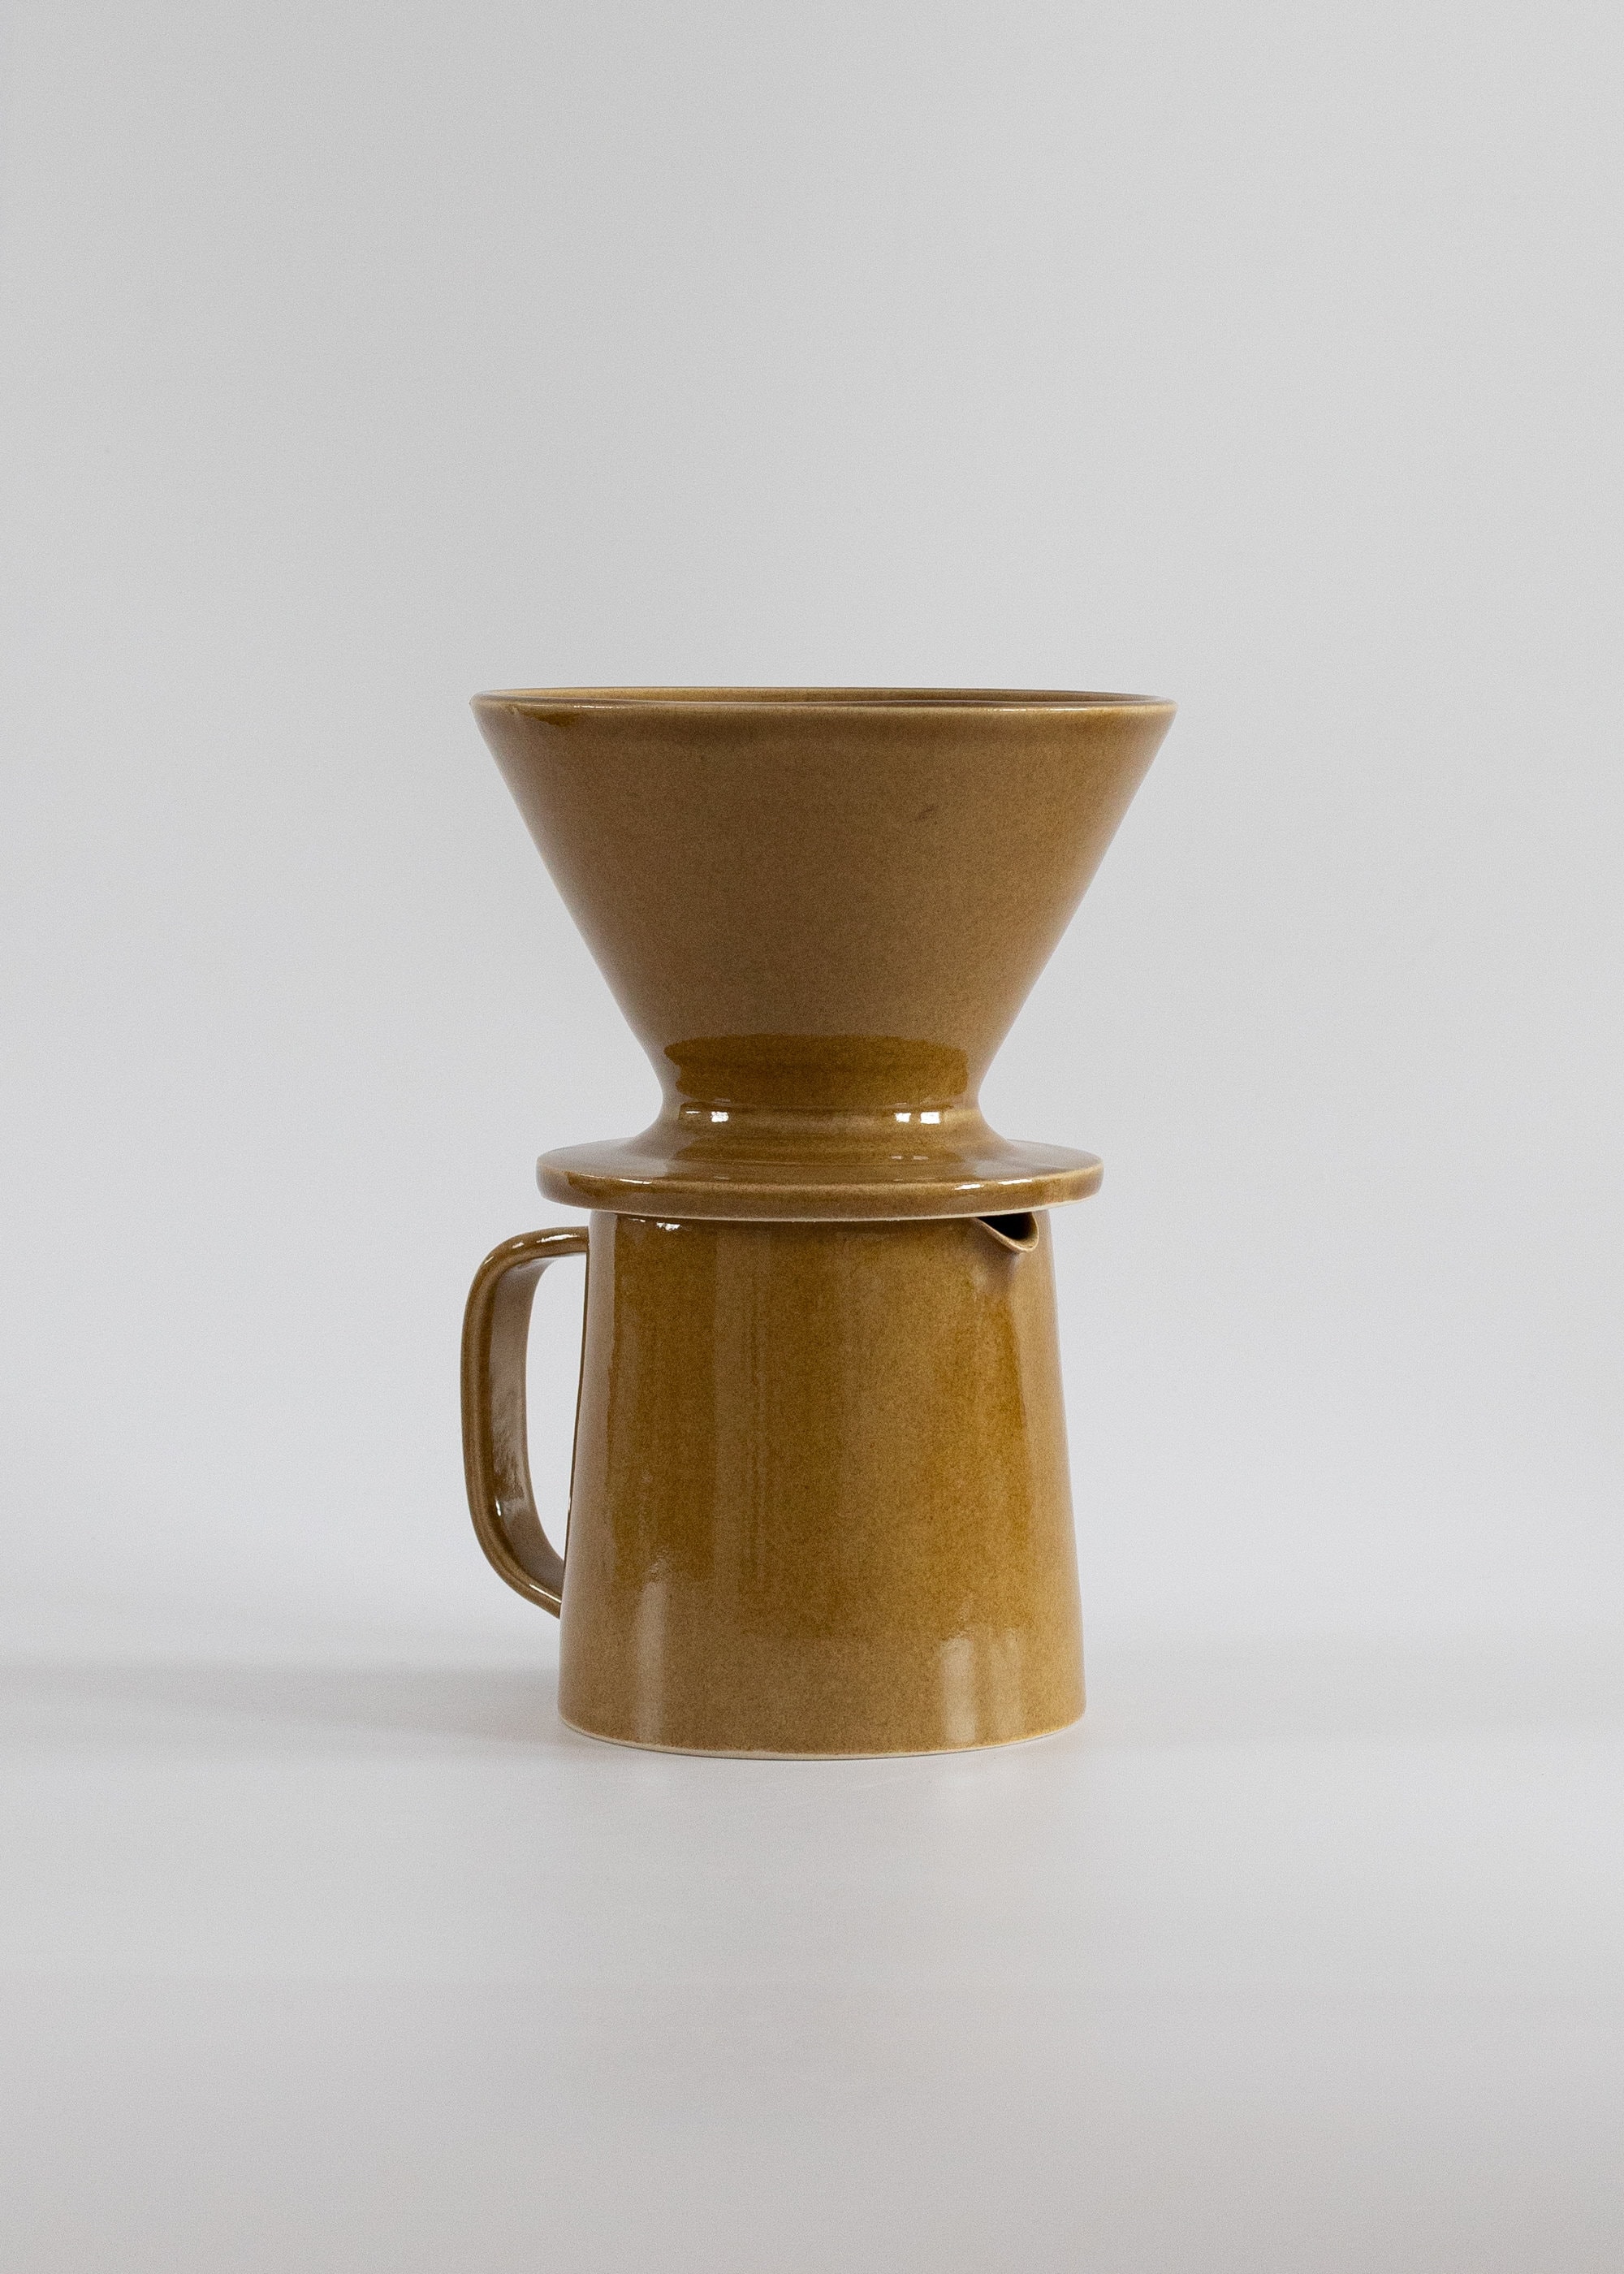 Cozy Season Gift Set - C70 Ceramic Pourover Kit & Coffee Subscription -  Loom Coffee Co.